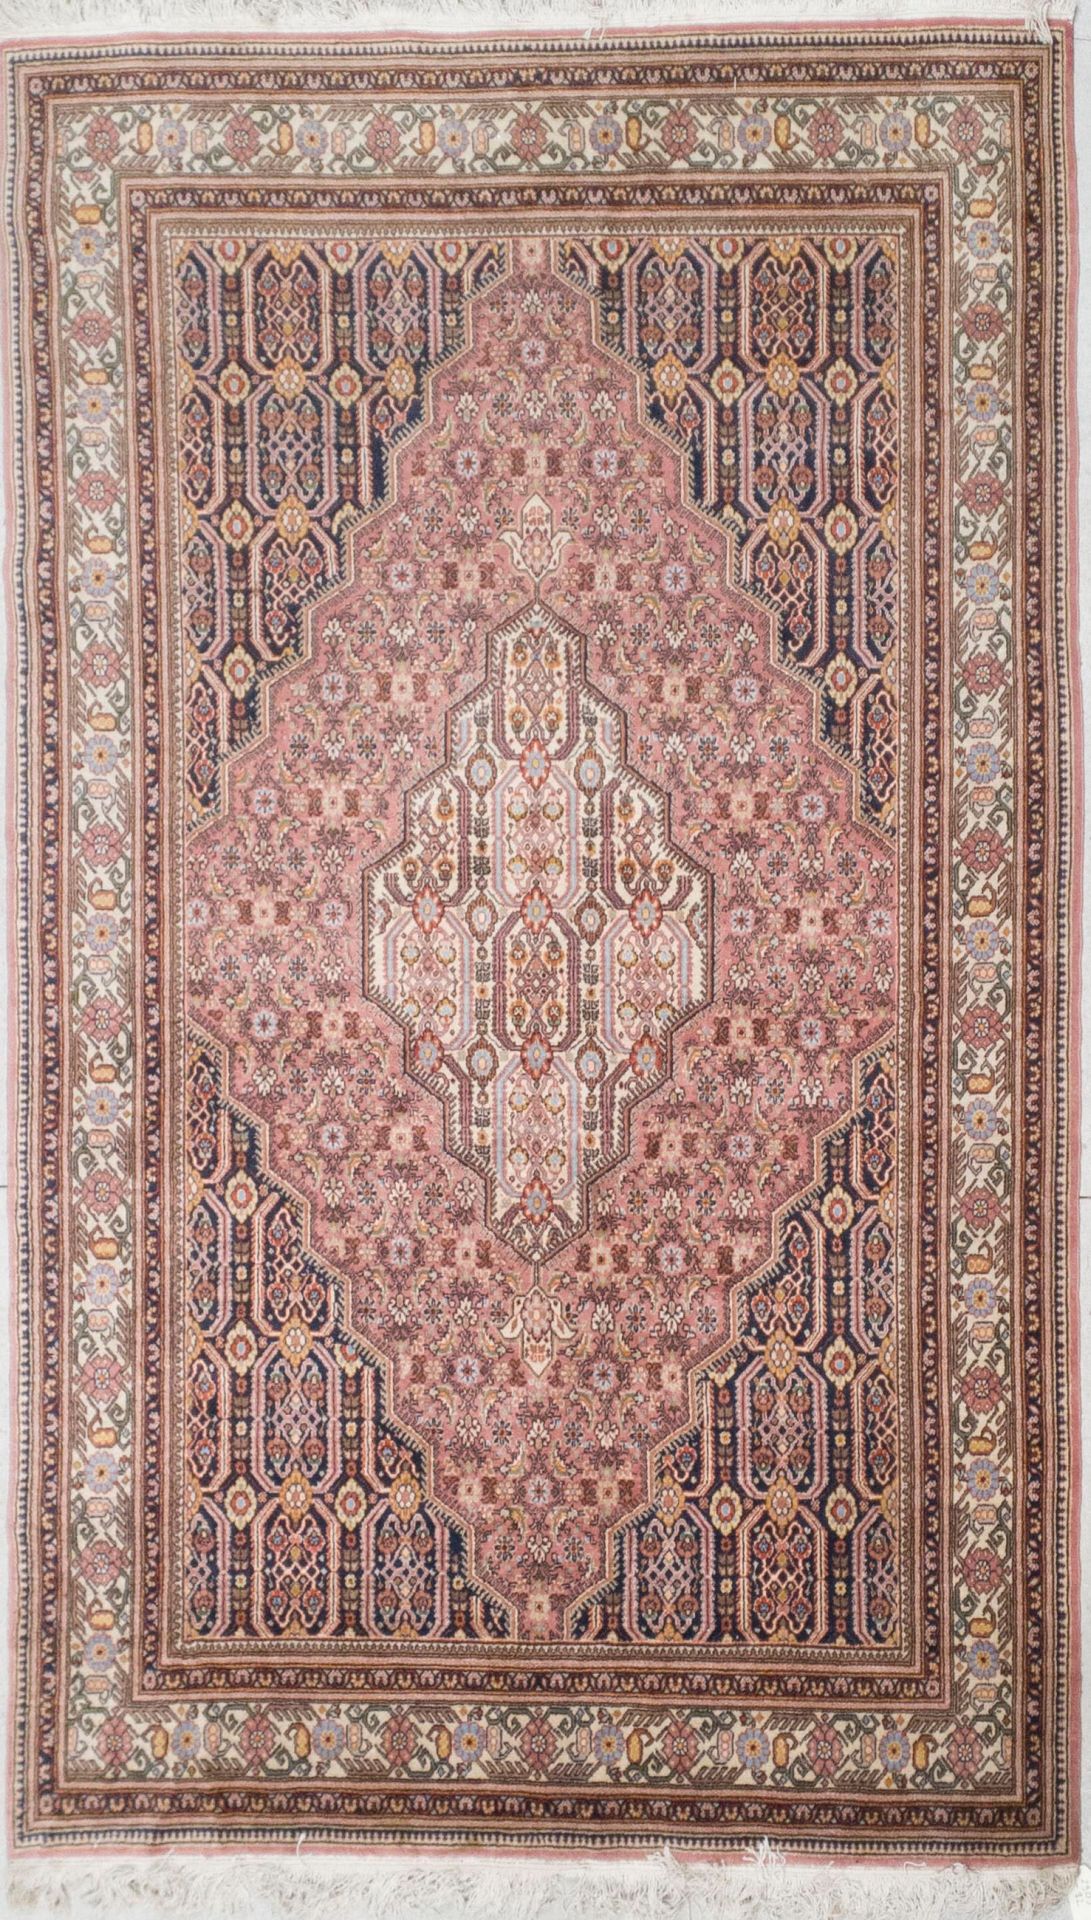 Null 多色羊毛机械地毯，实地有菱形和花朵的几何装饰，边框有花朵

罗马尼亚, 20世纪

308 x 202 cm

磨损的